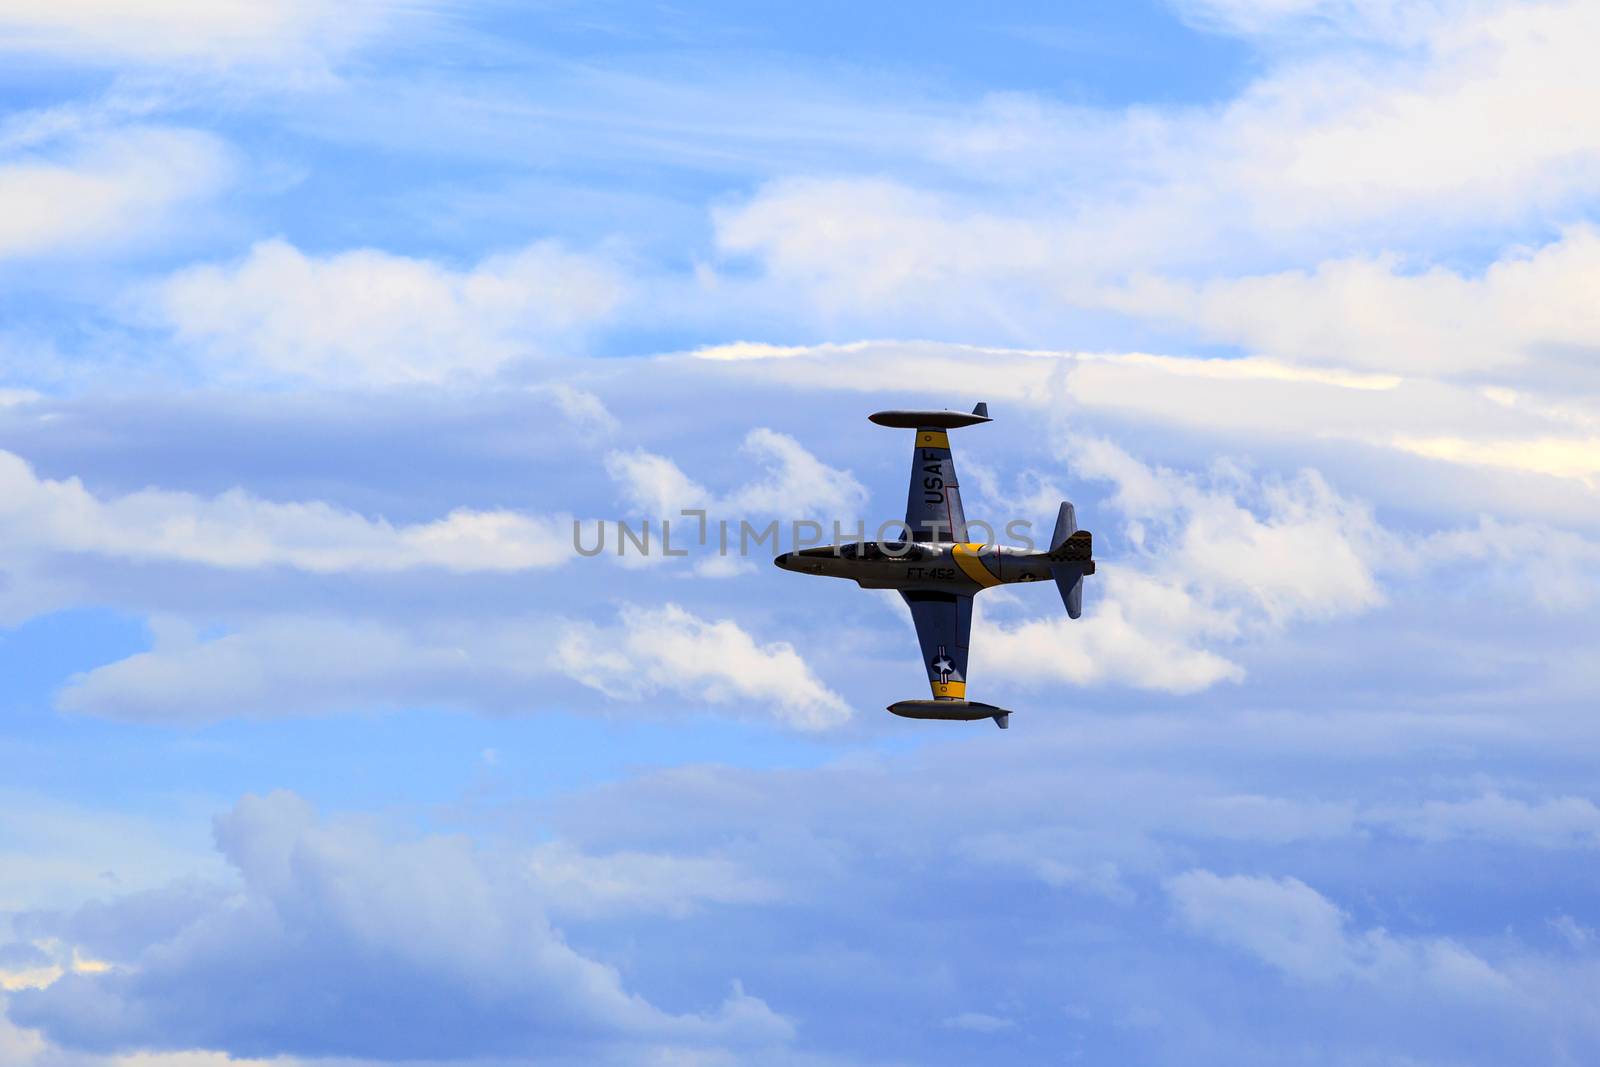 At The Lethbridge Airshow by Imagecom